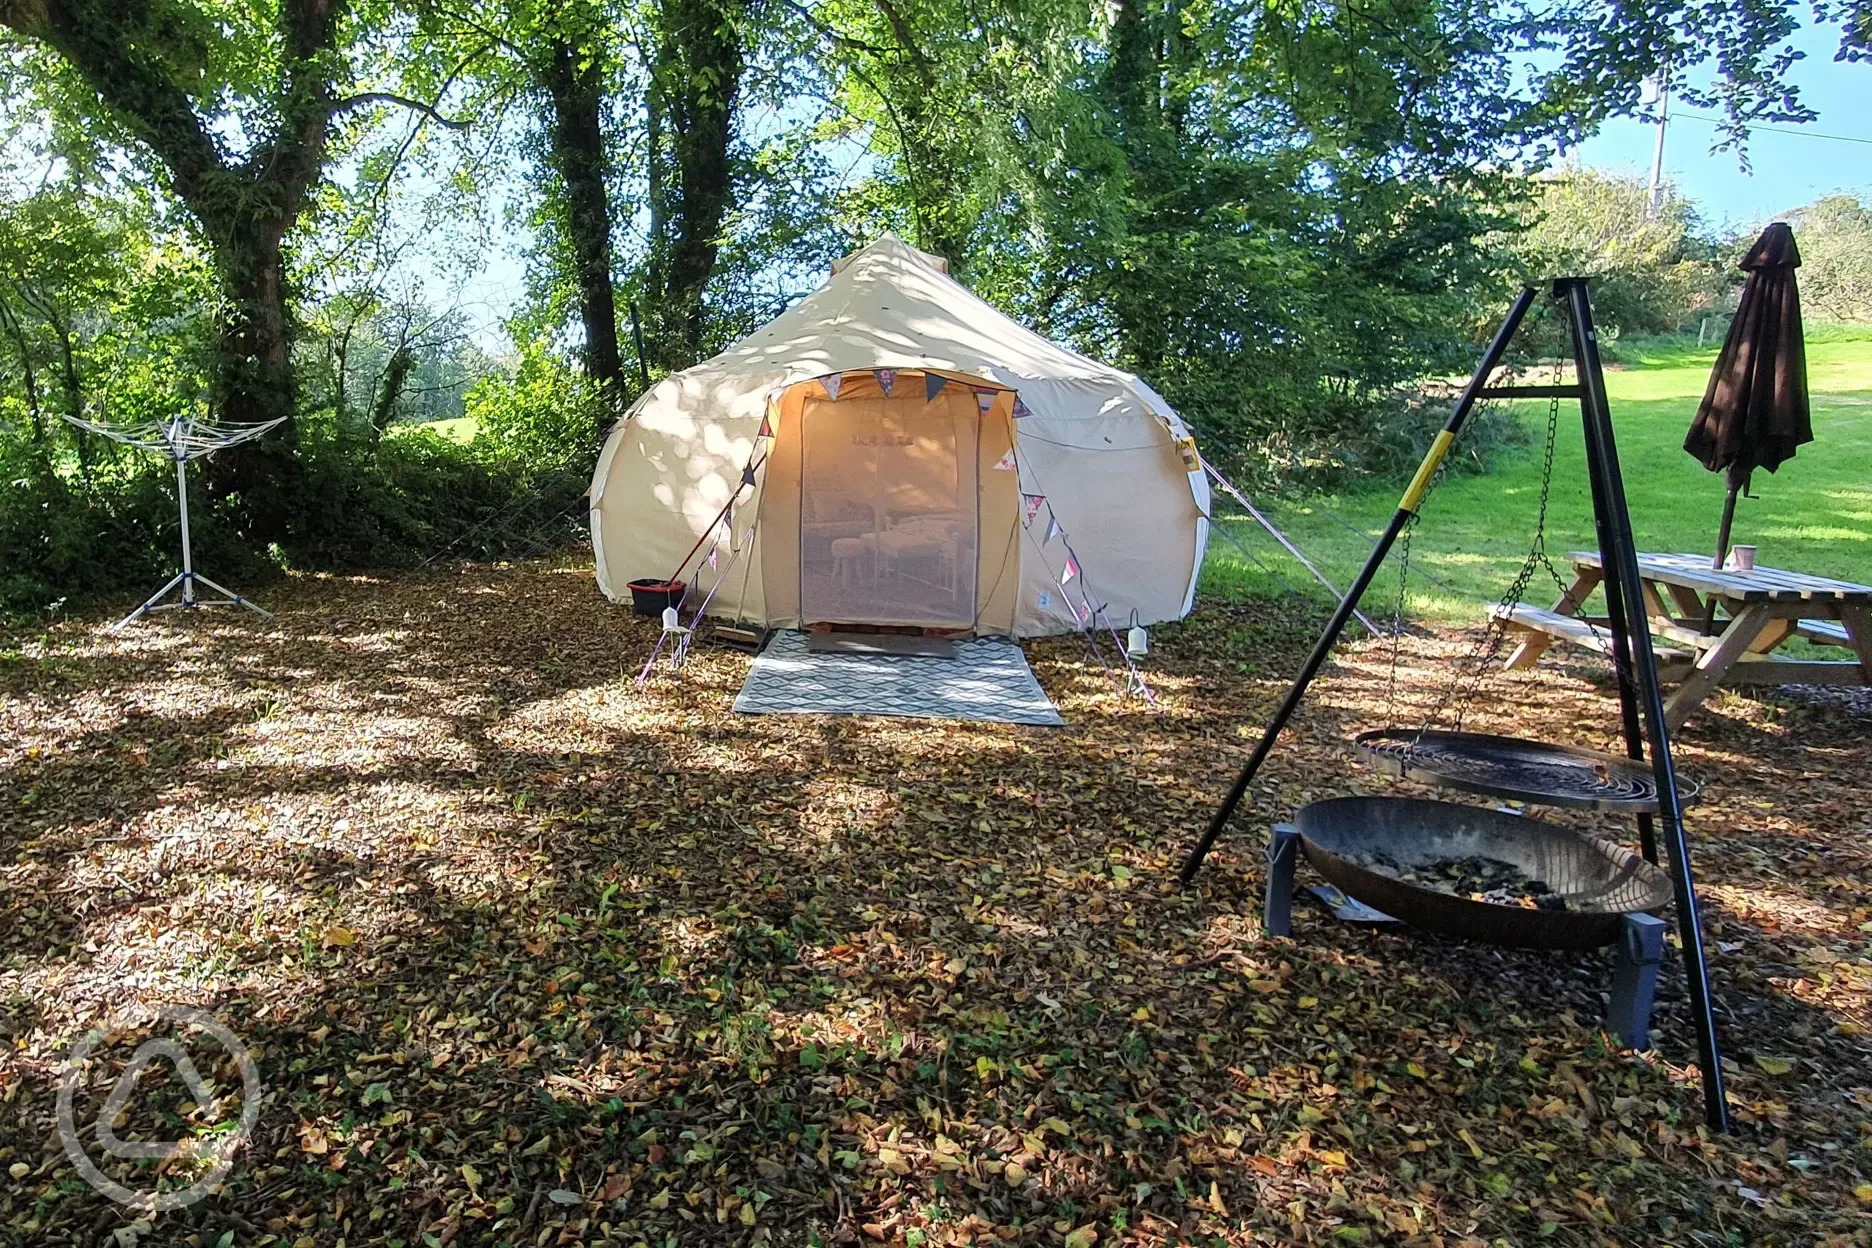 Appleblosson Belle Tent glamping